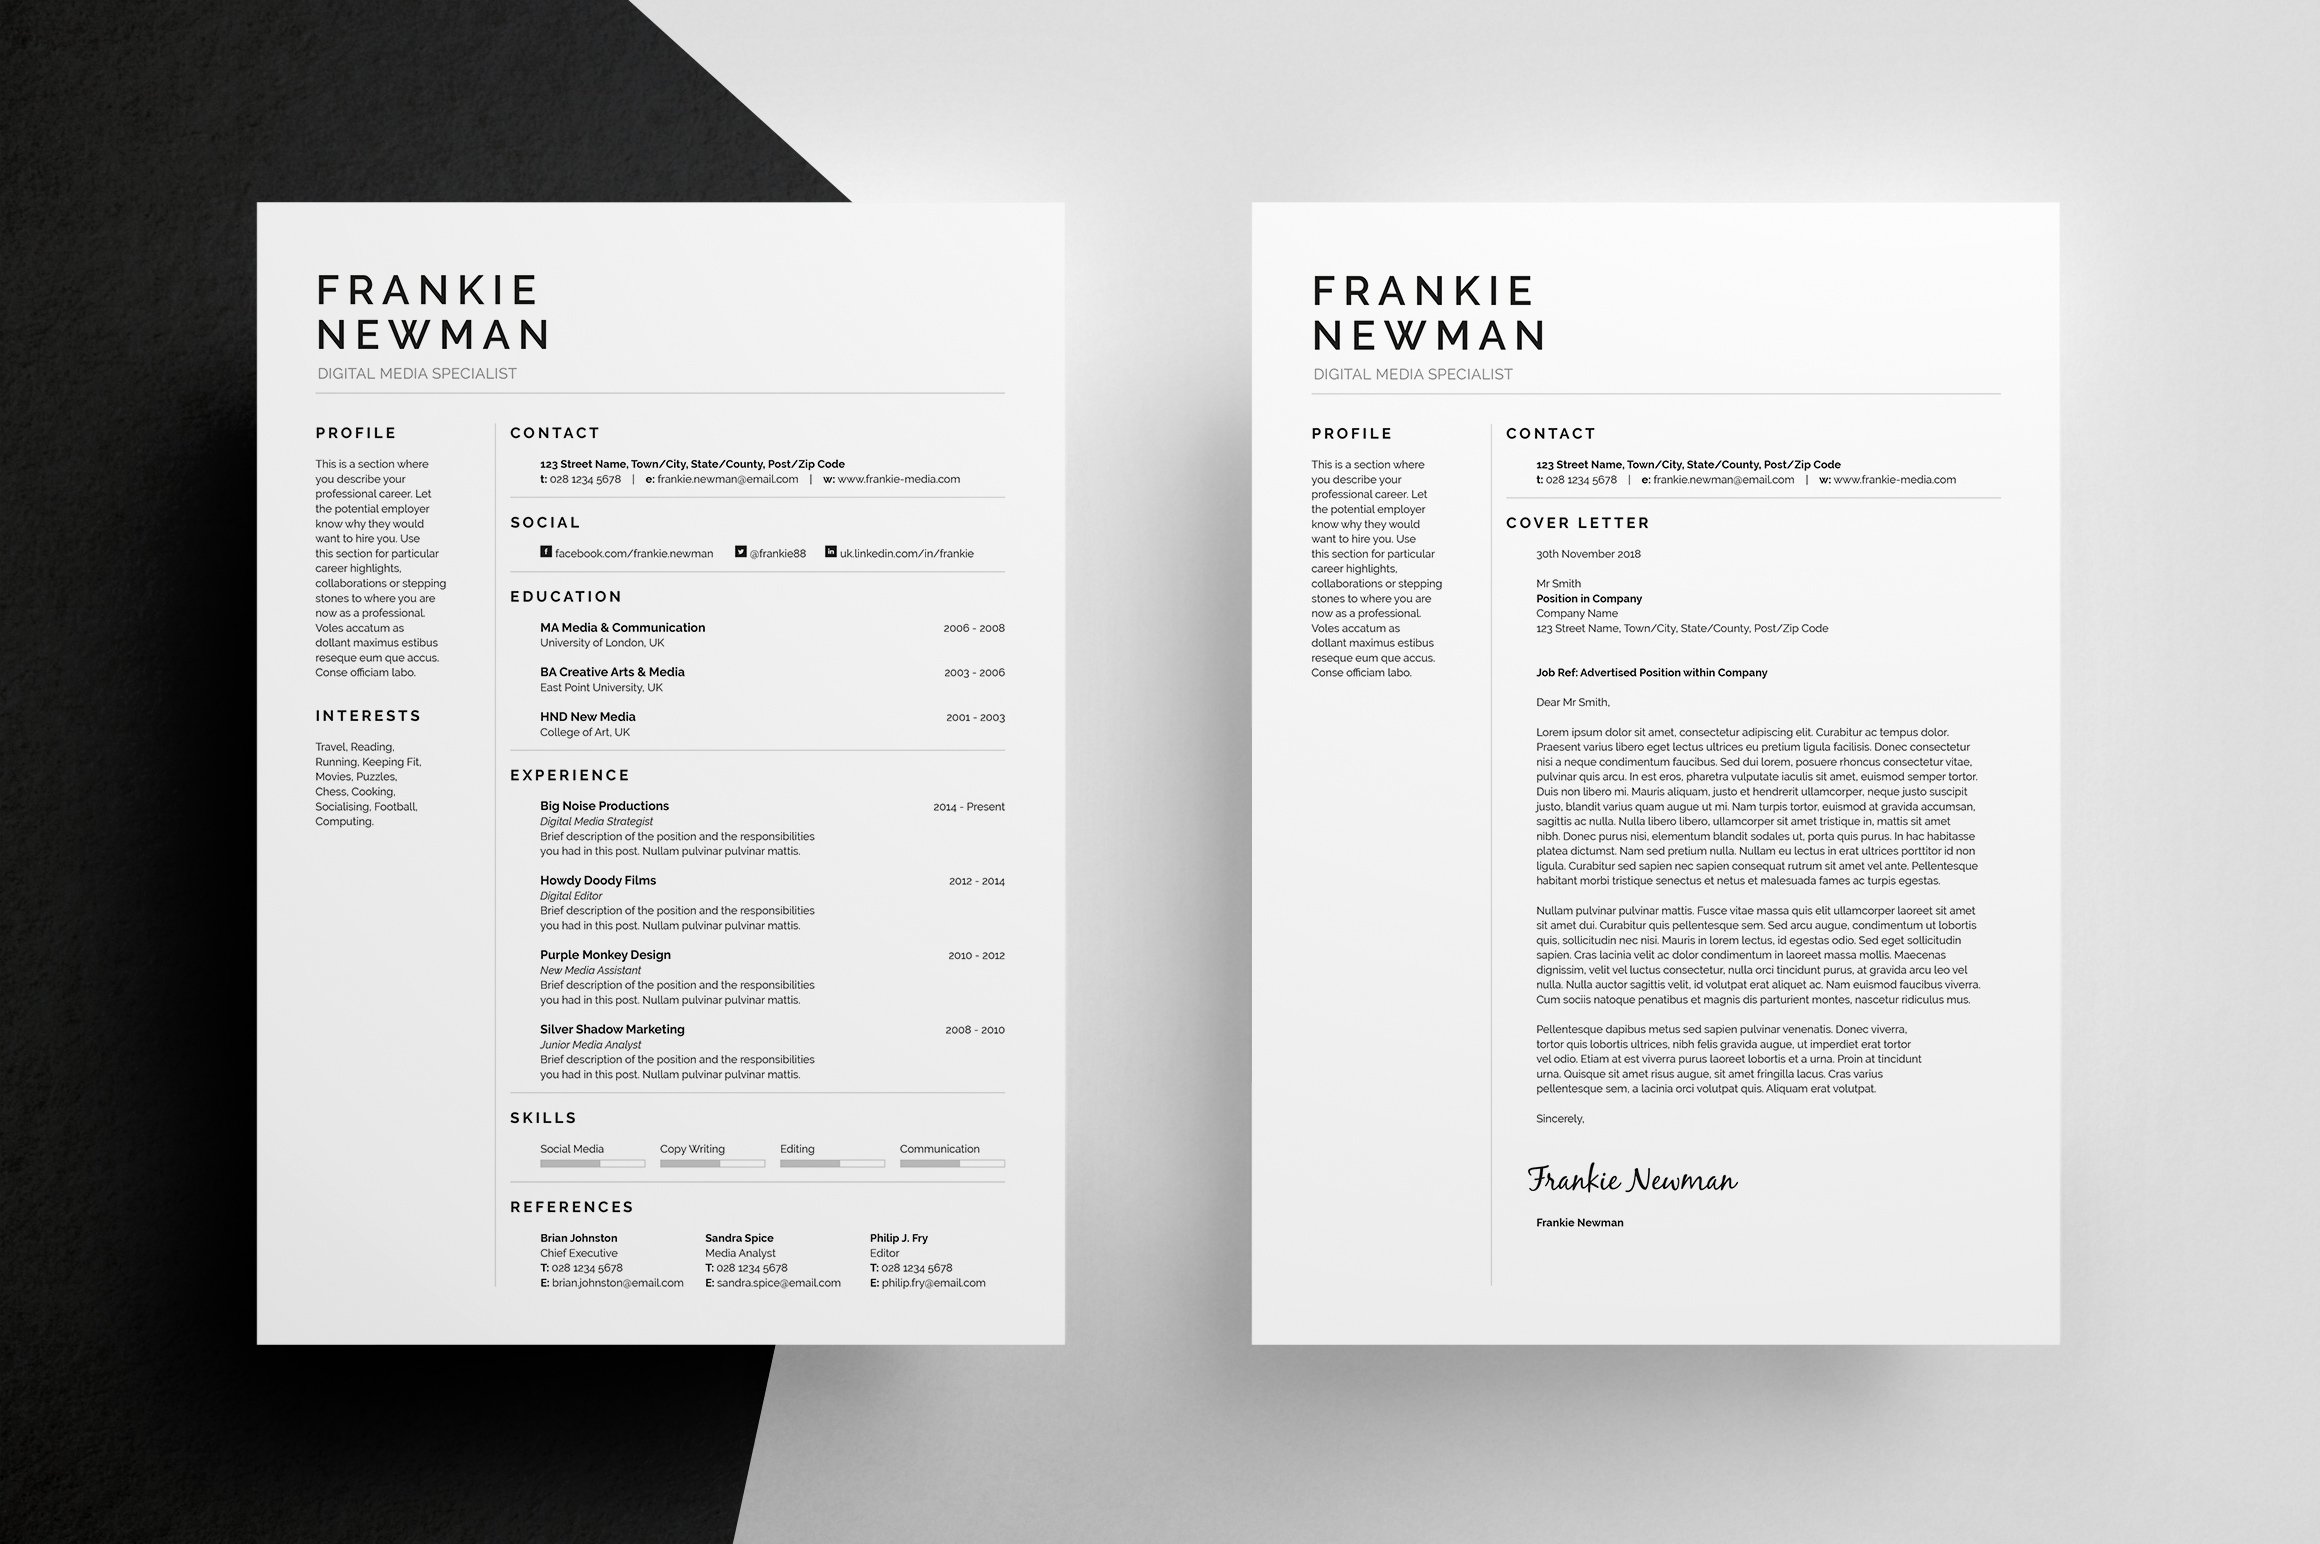 Resume/CV - Frankie preview image.